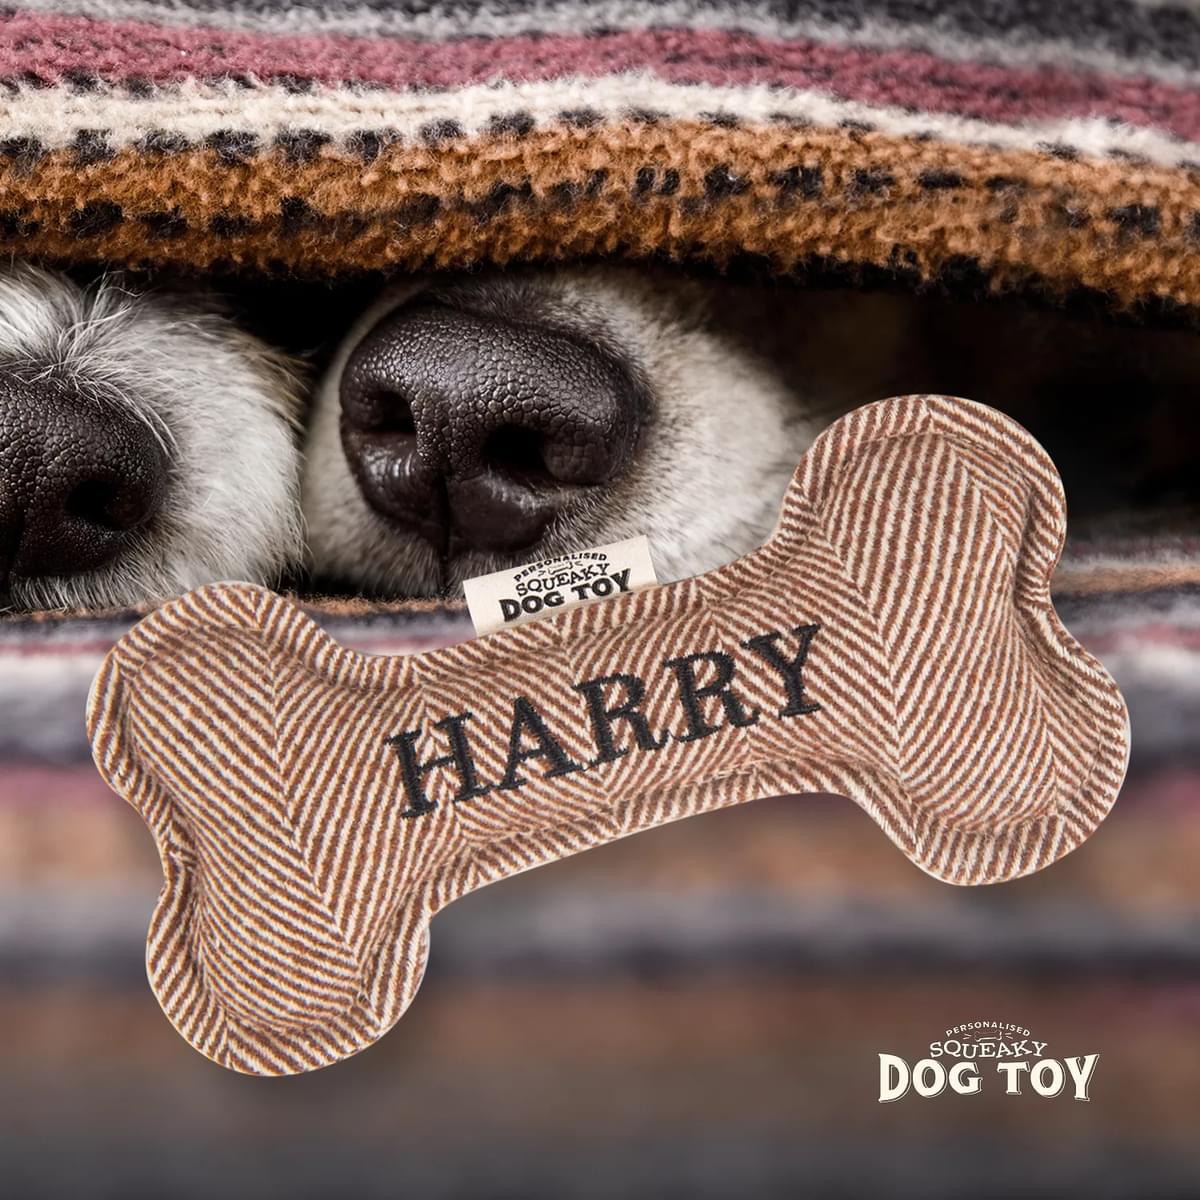 Named Squeaky Dog Toy- Harry. Bone shaped herringbone tweed pattern dog toy. 